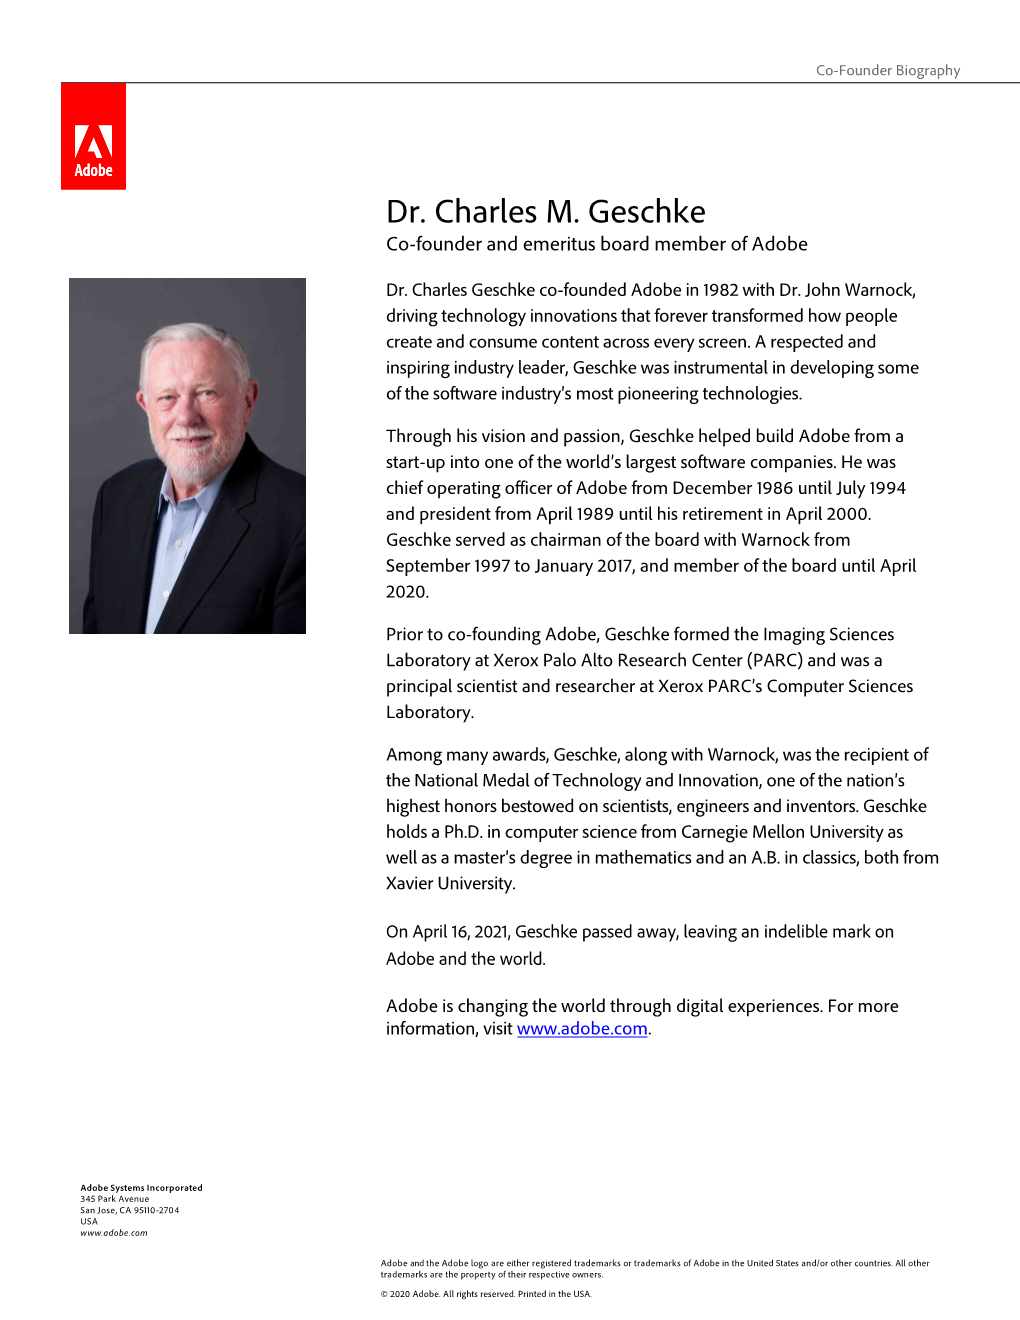 Dr. Charles M. Geschke Co-Founder and Emeritus Board Member of Adobe